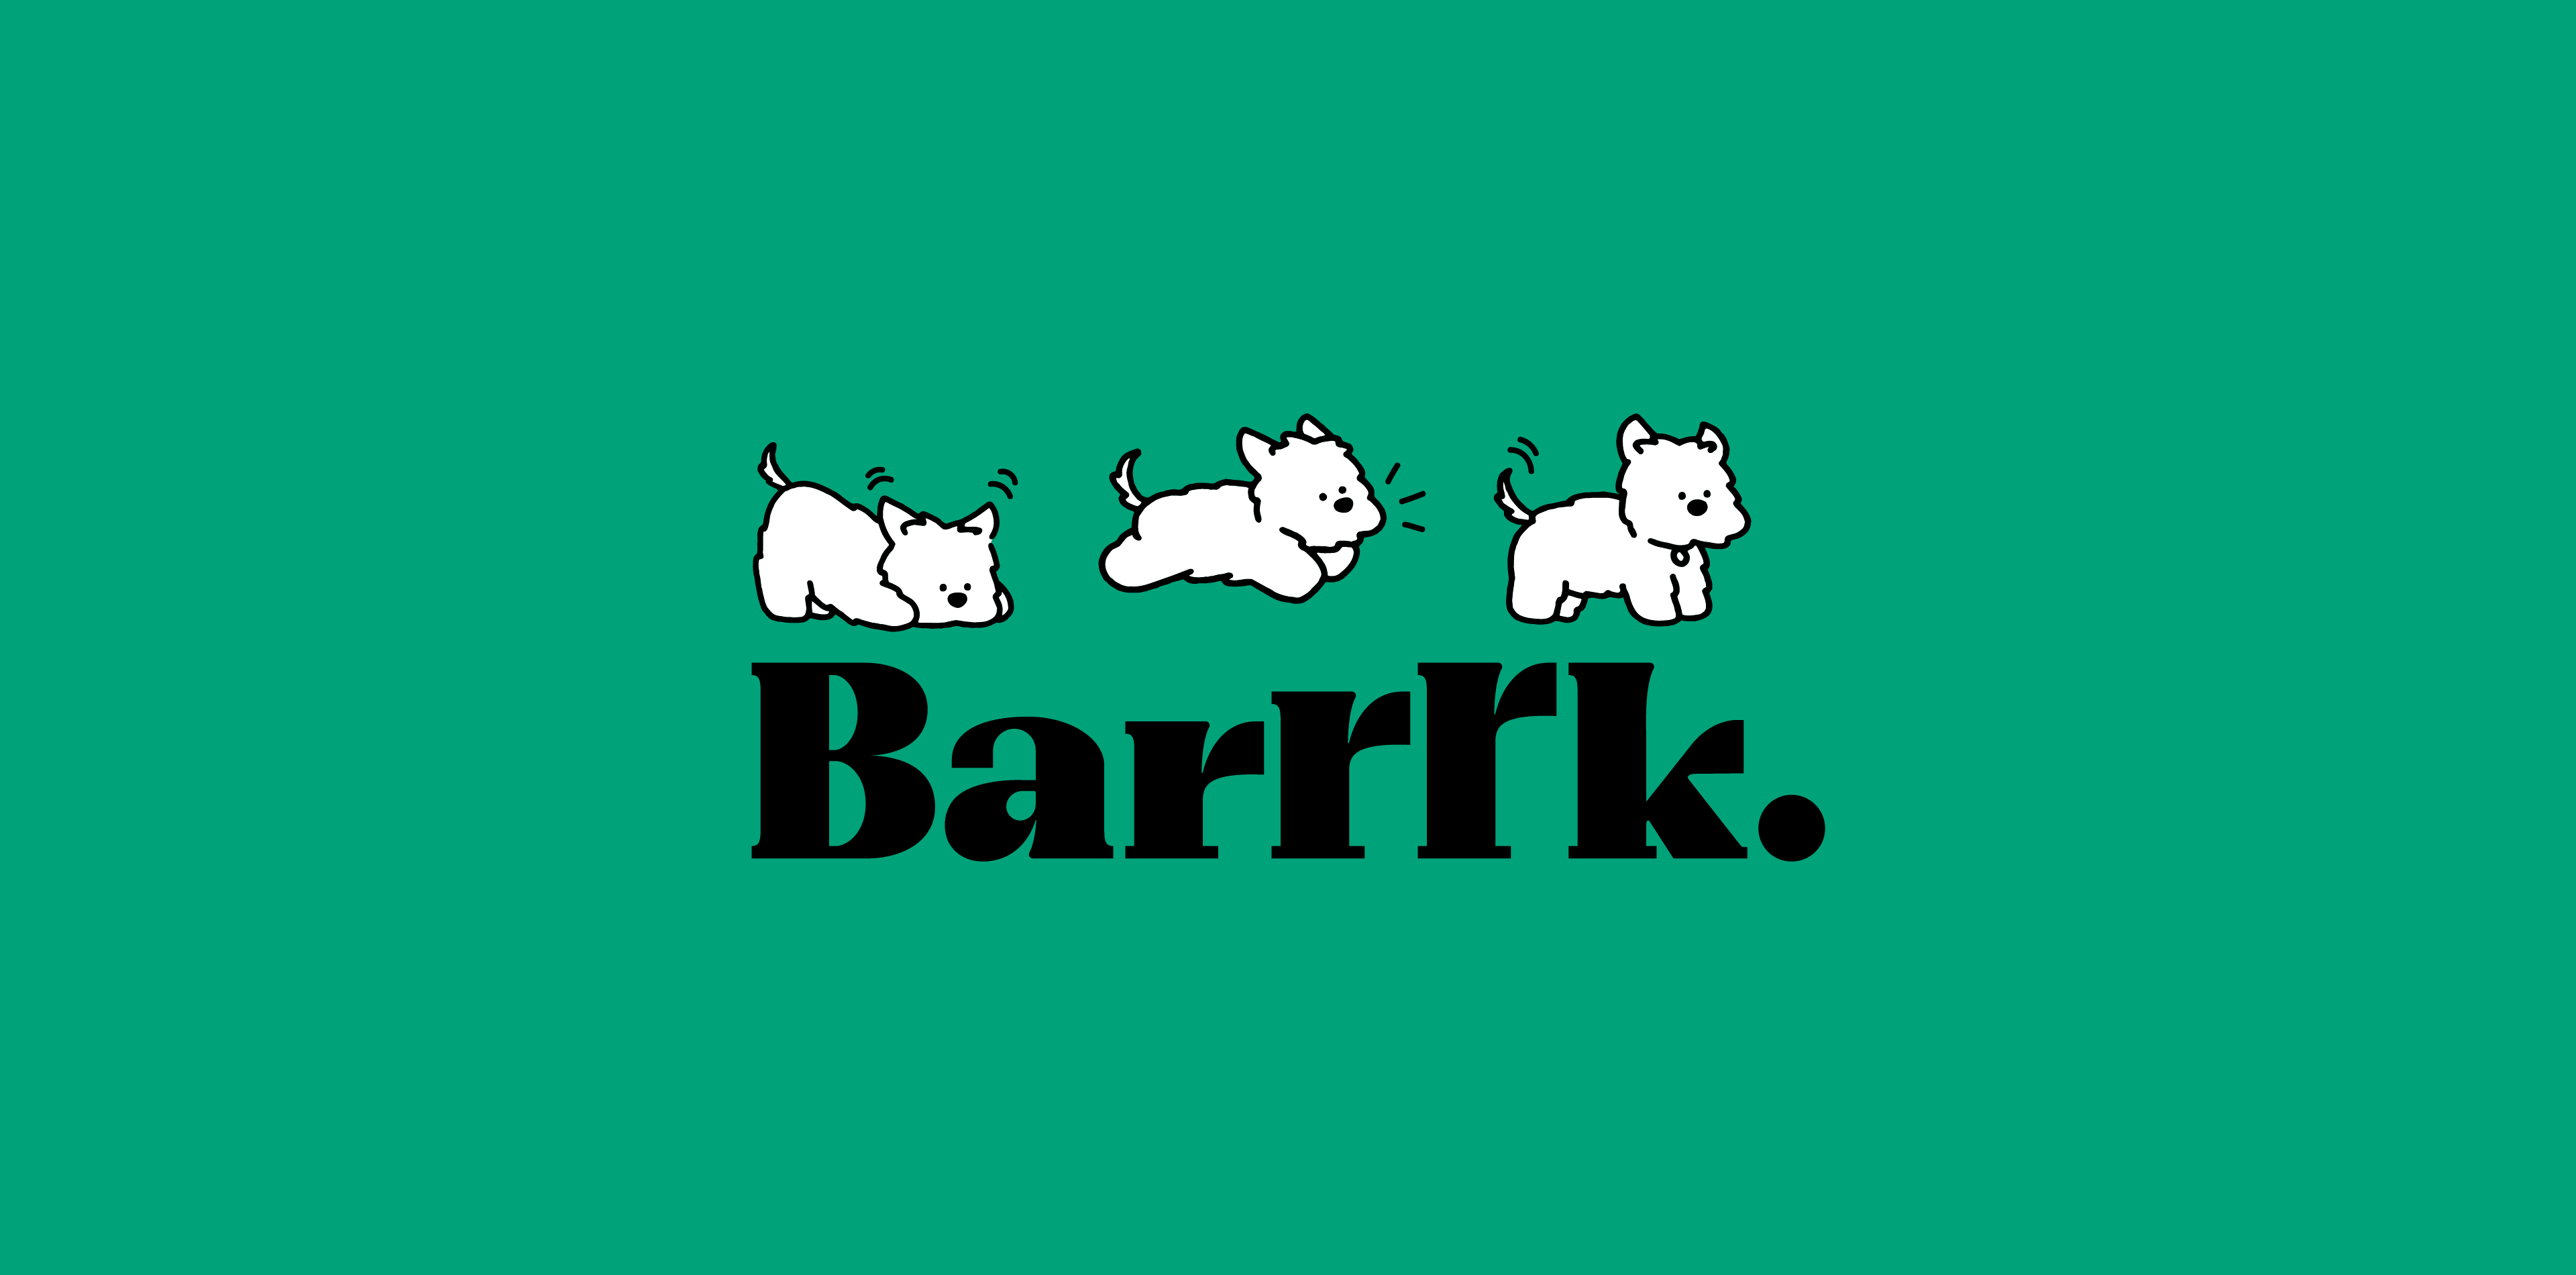 Barrrk